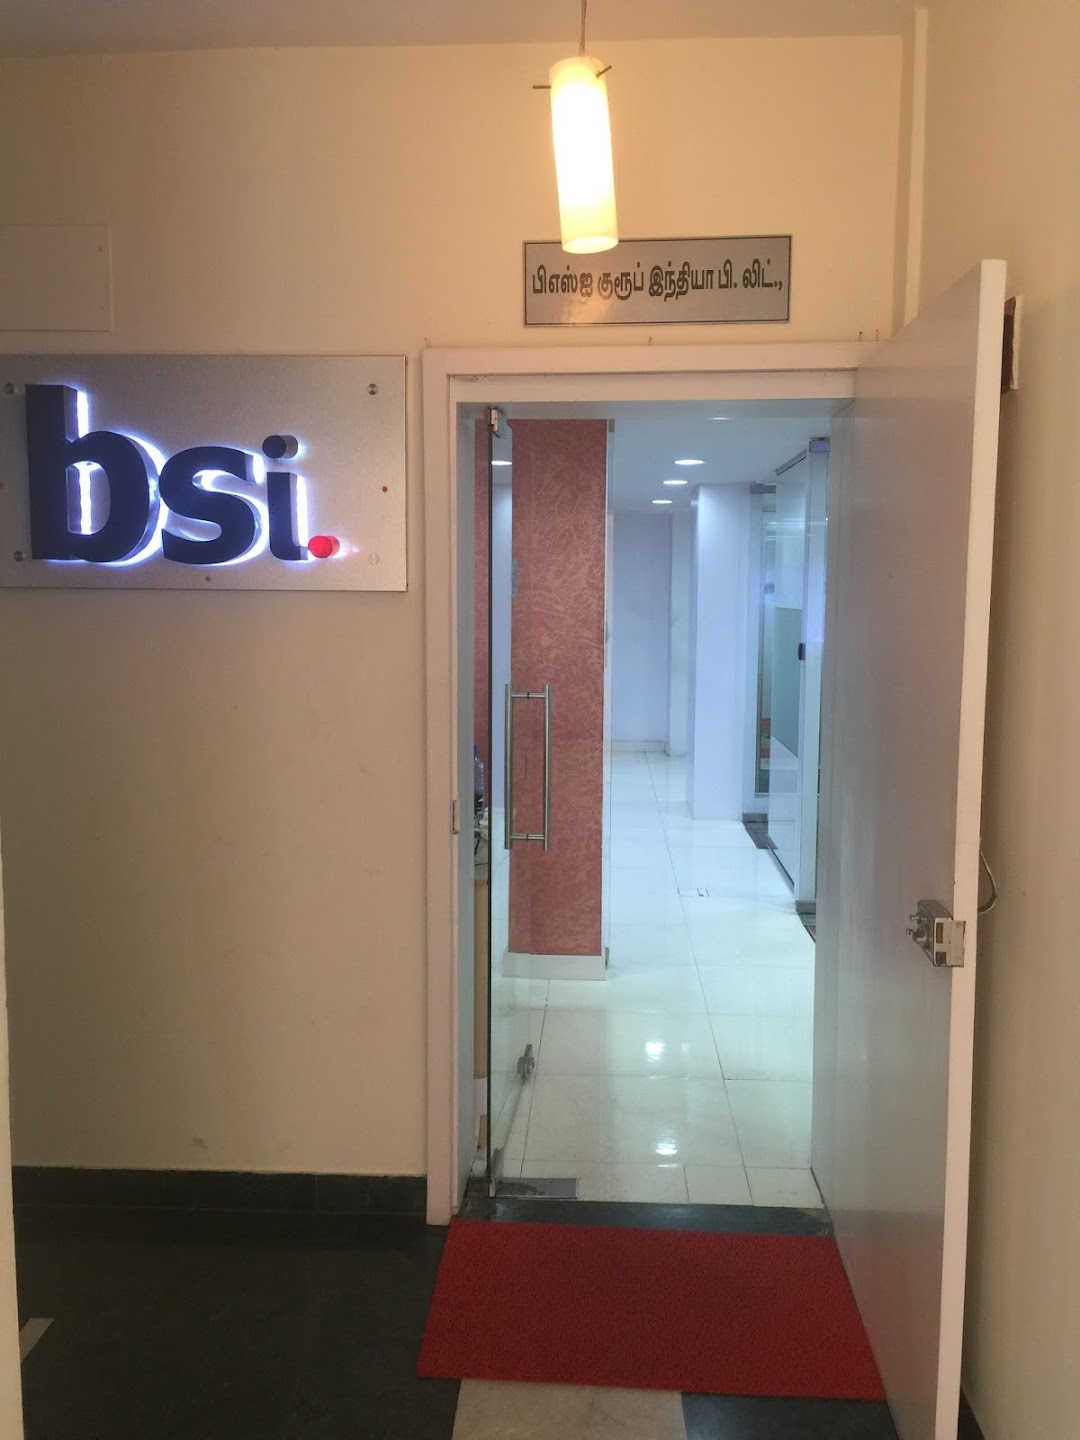 BSI Group India Pvt. Ltd., Chennai